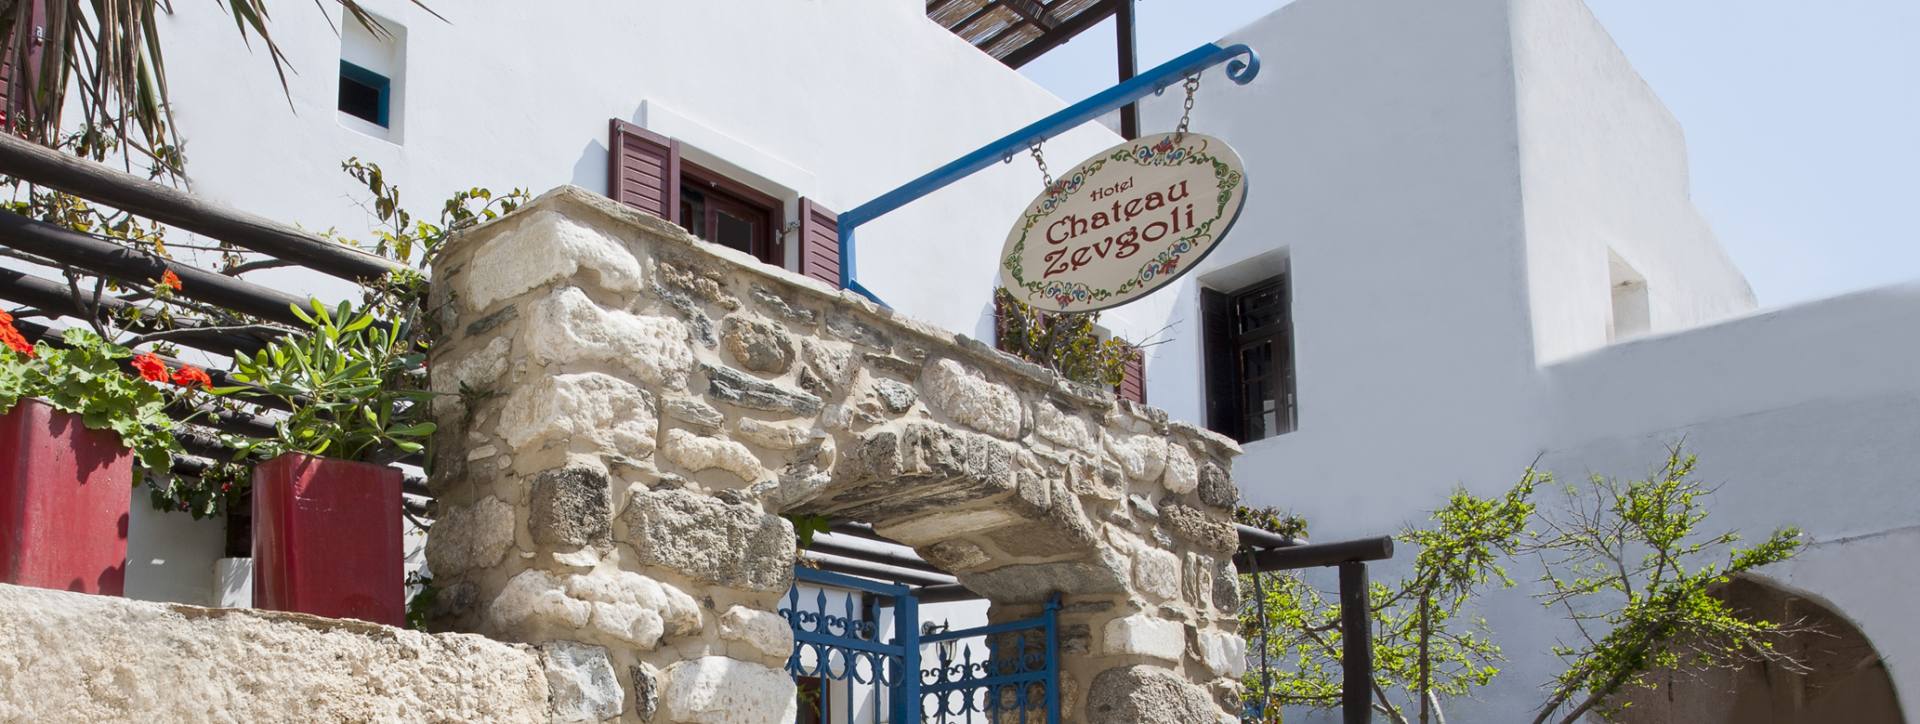 Naxos Hotel Chateau Zevgoli